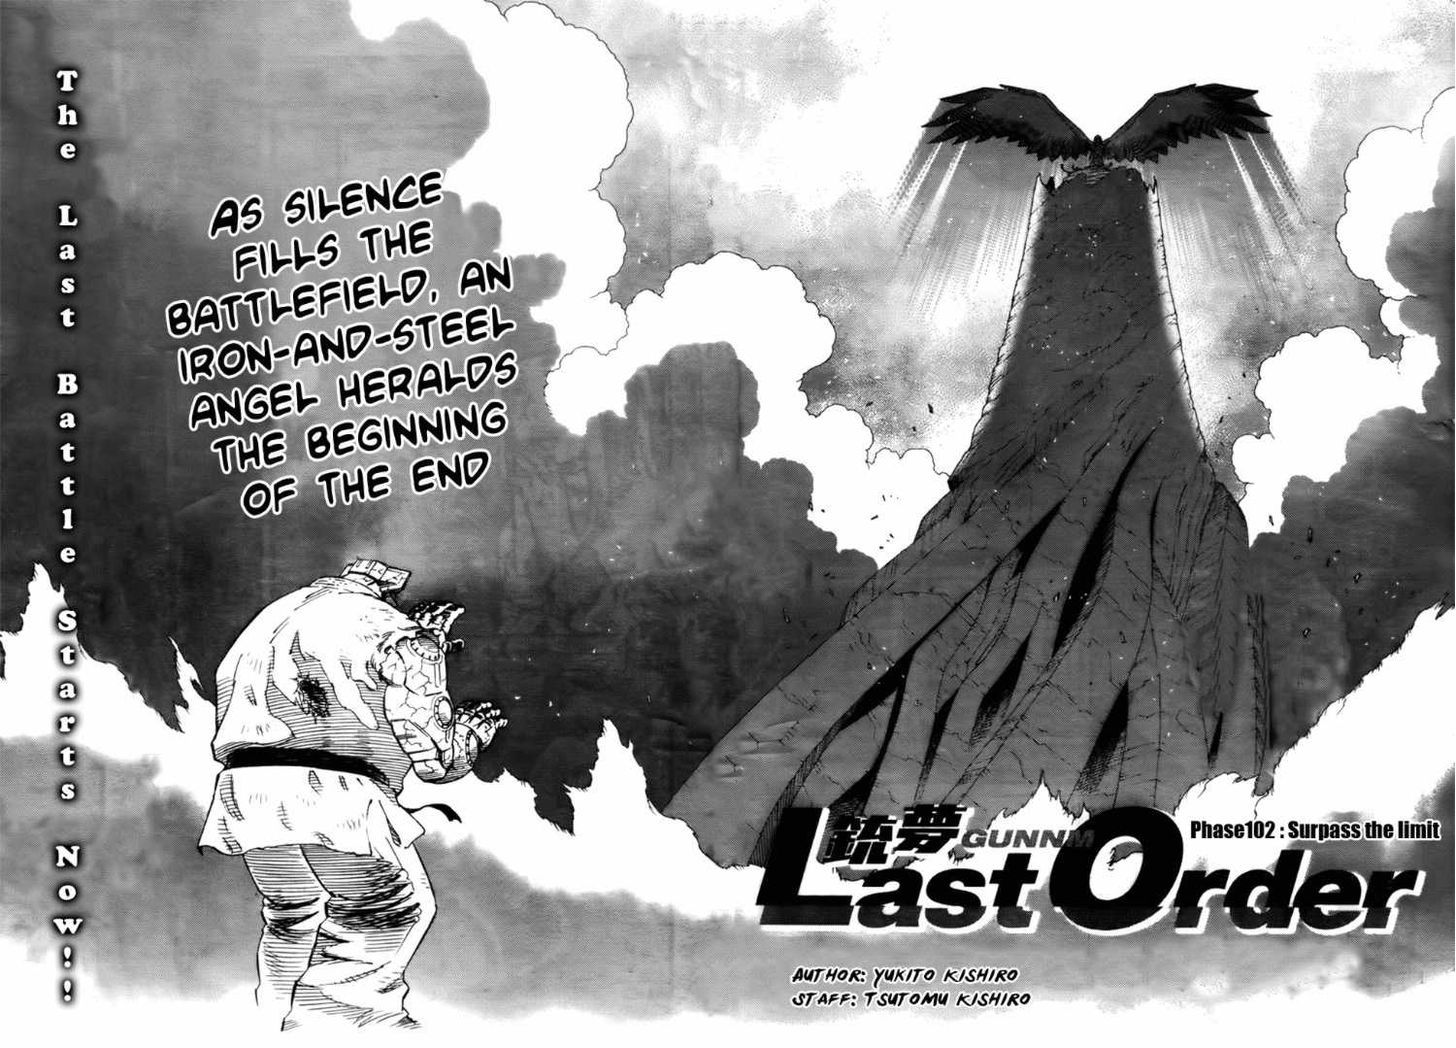 Battle Angel Alita: Last Order - Page 2